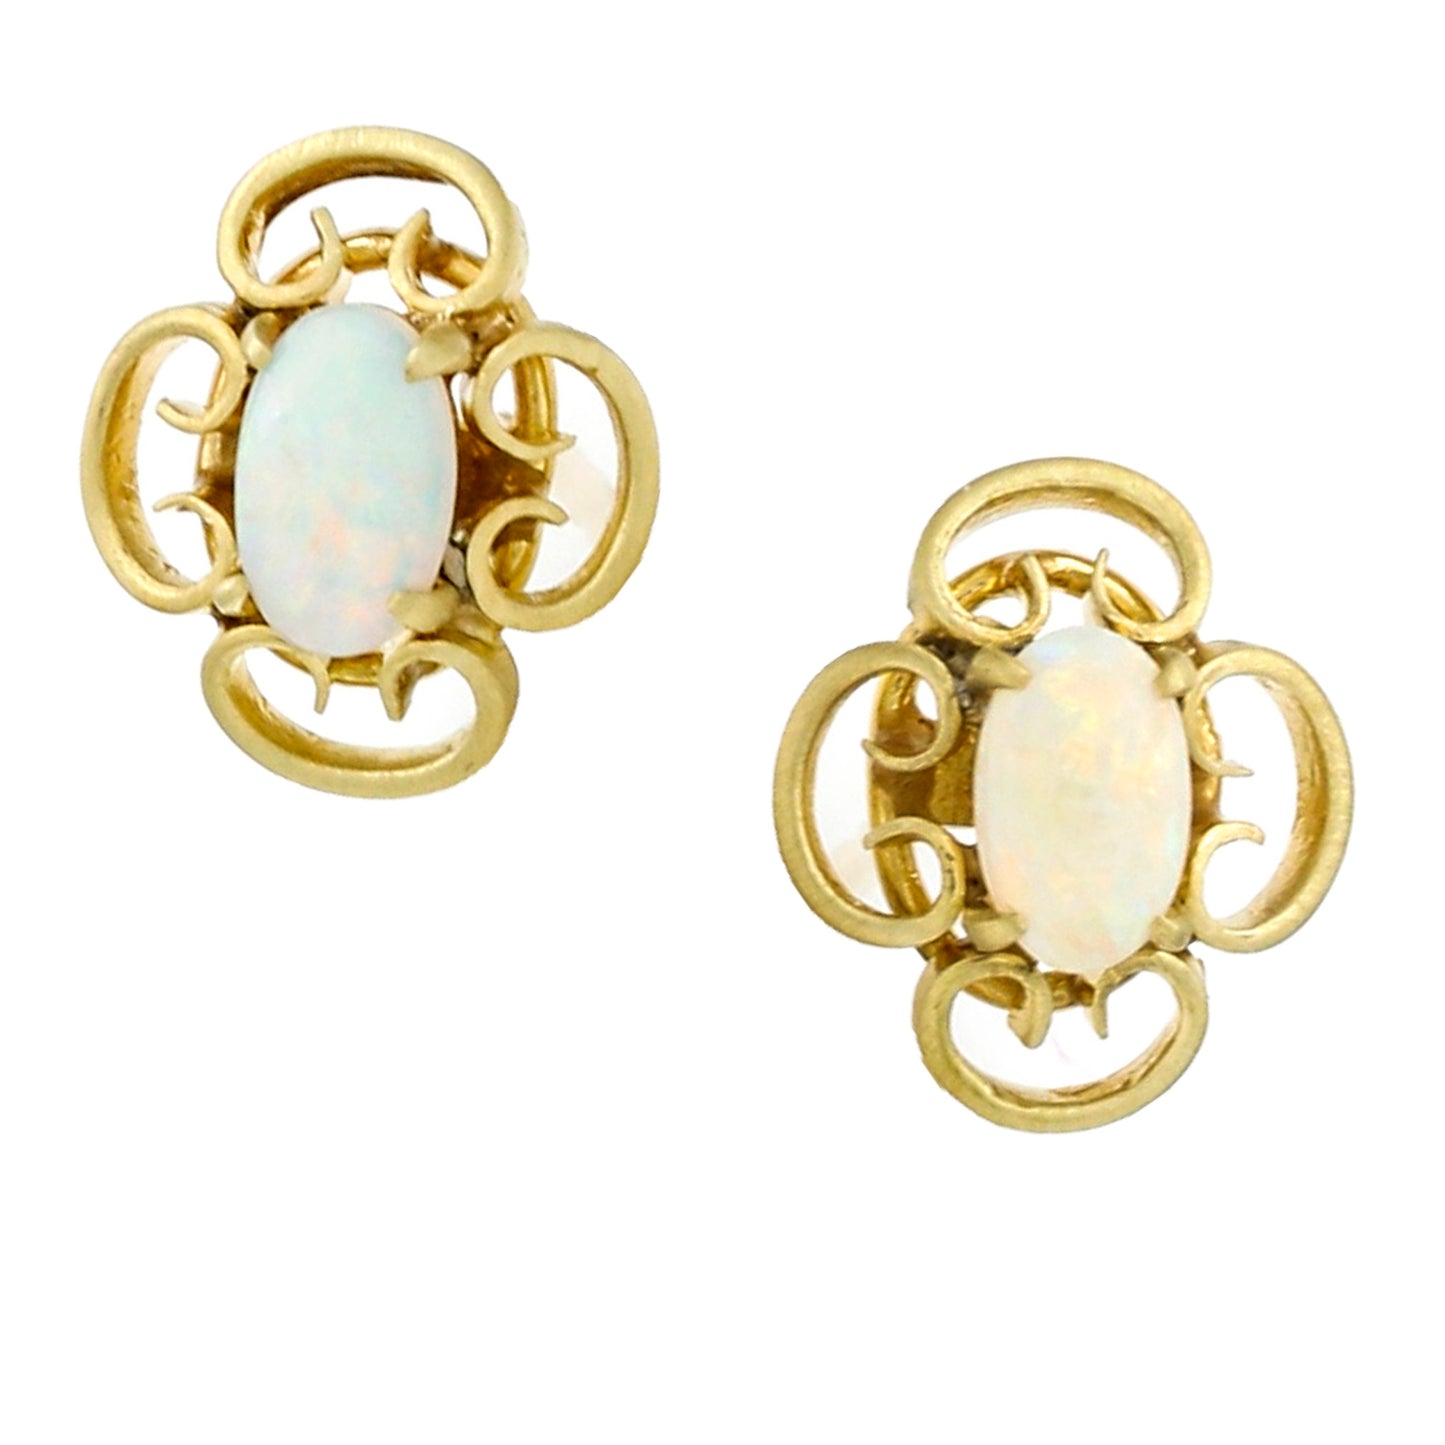 Women's Satin Finish Opal Stud Earrings with Openwork in 14k Yellow Gold